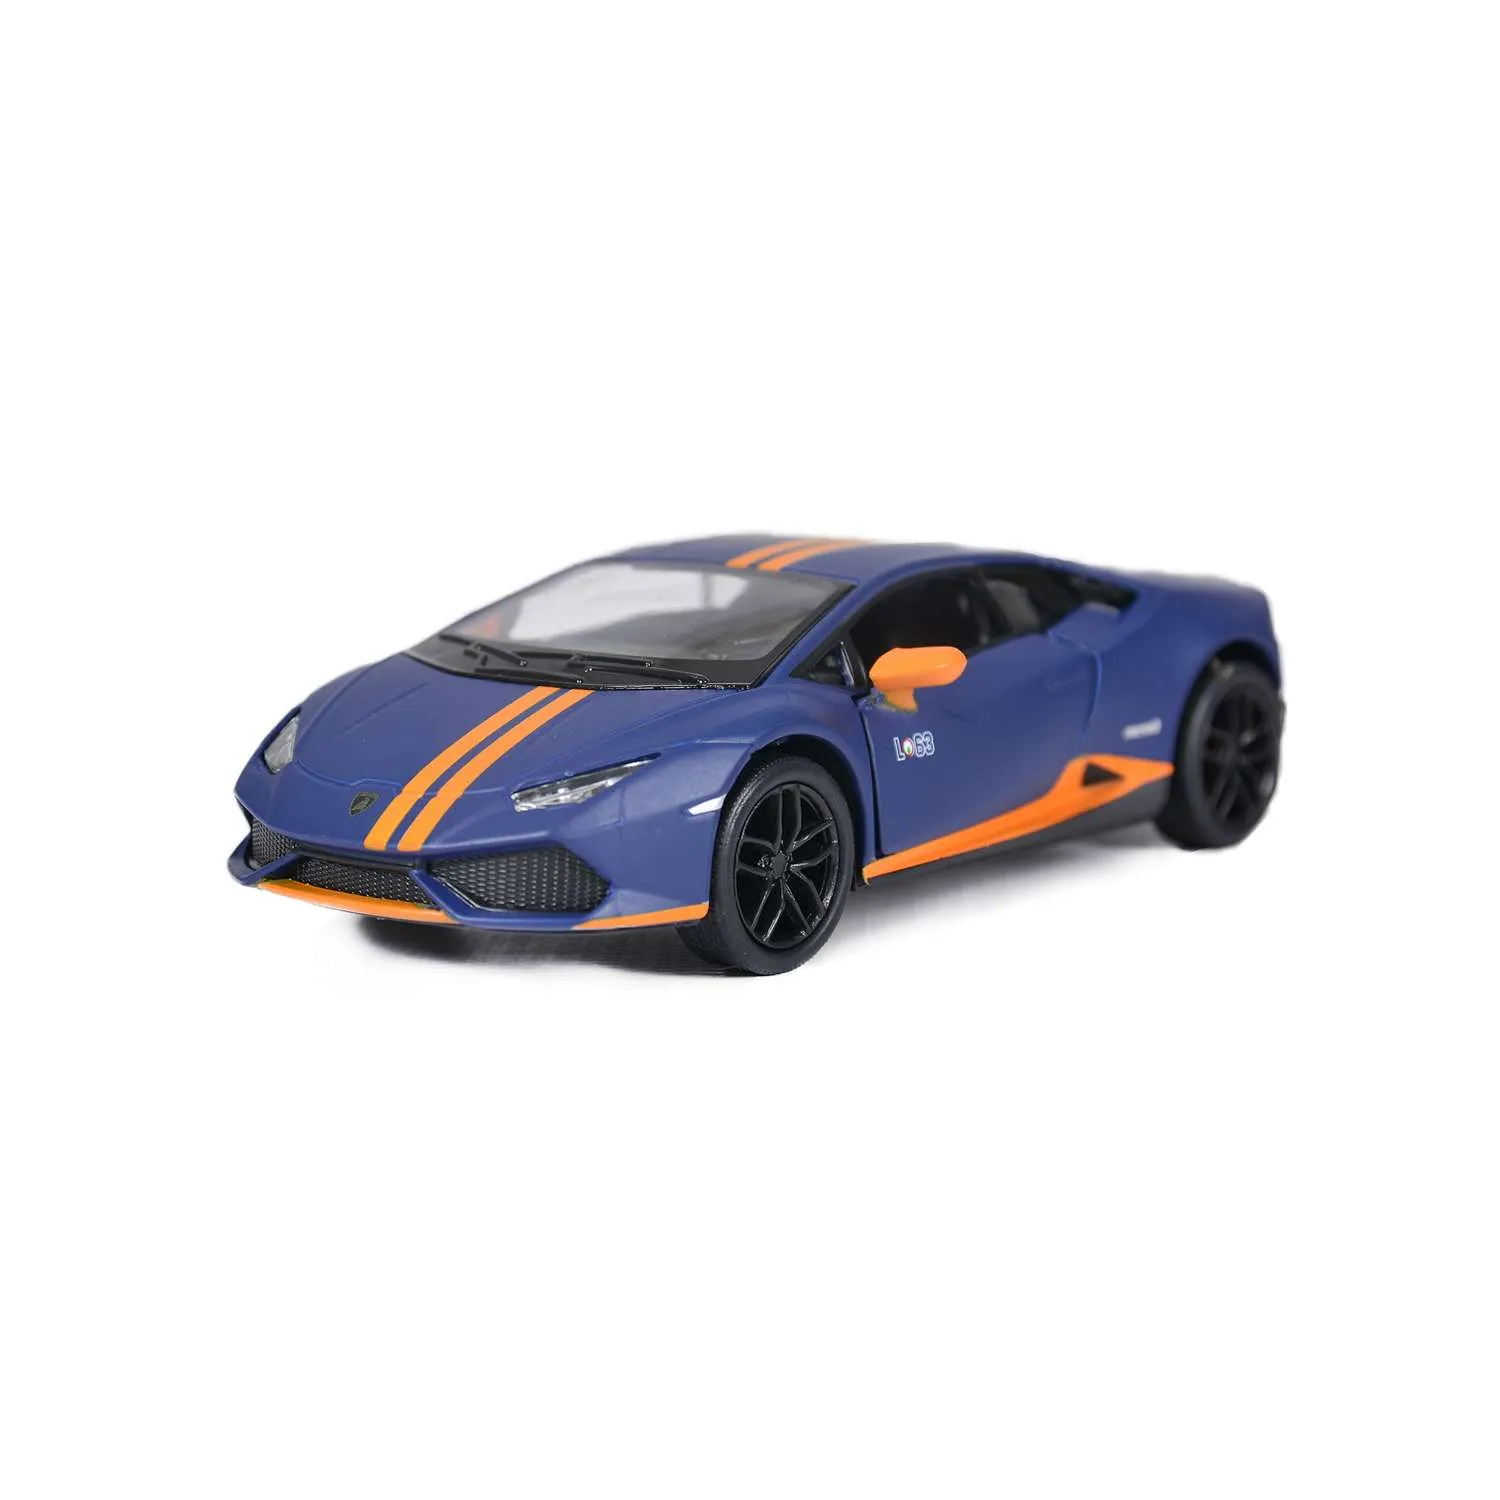 Kinsmart. Модель арт. КТ5401/4 "Lamborghini Huracan LP 610-4 Avio" 1:36 (синяя) инерц. КТ5401/4